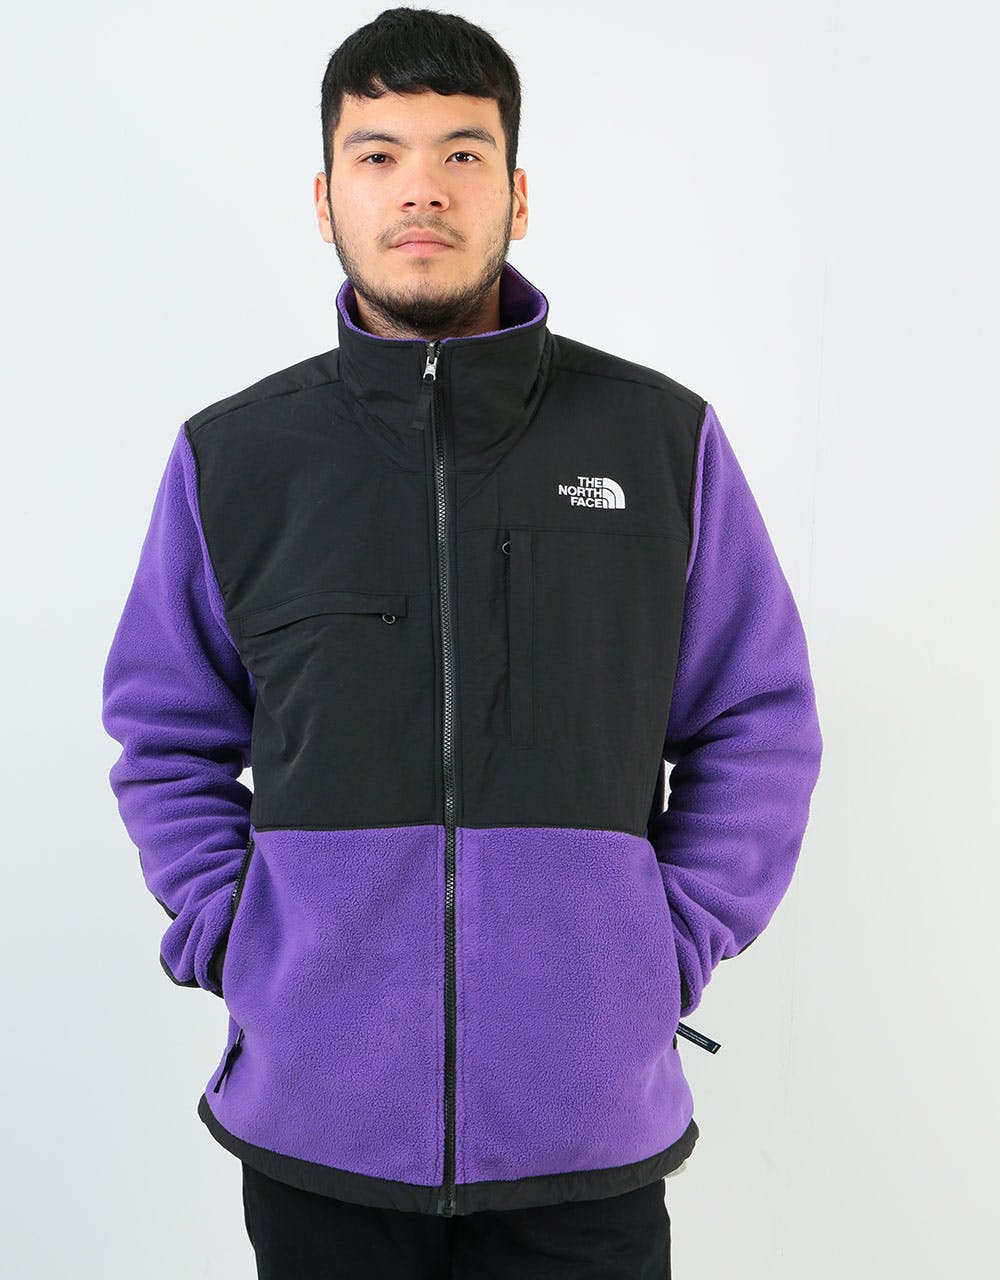 The North Face Denali Jacket 2 - Hero Purple